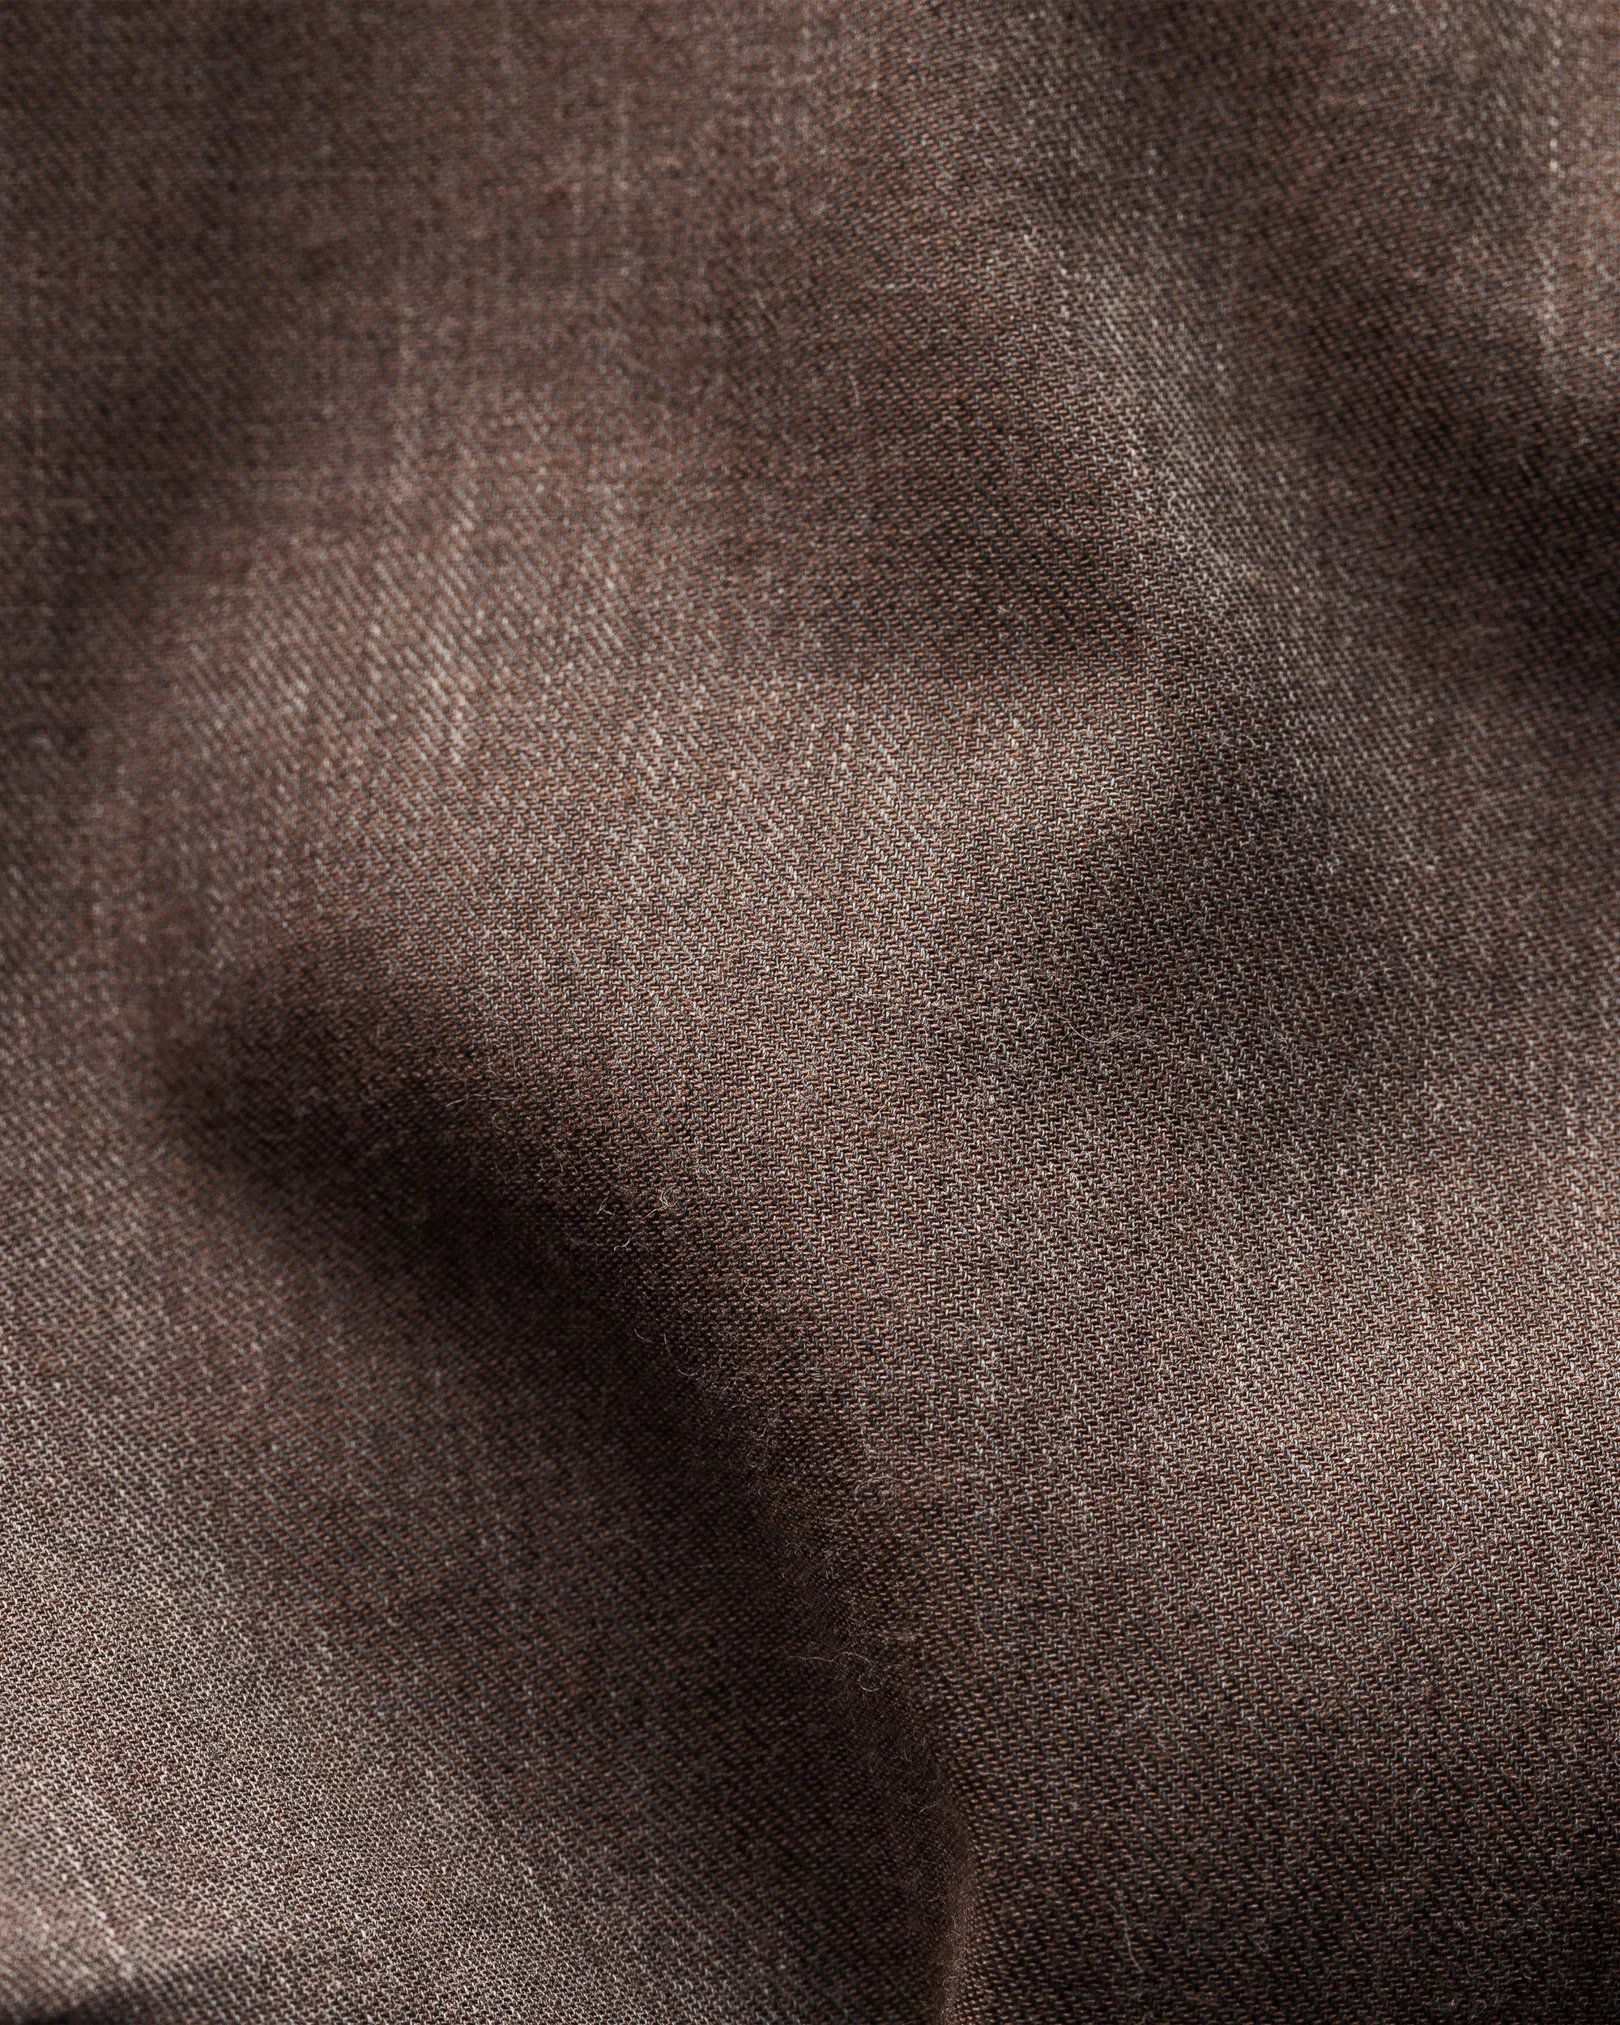 Eton - brown crease resistant flannel